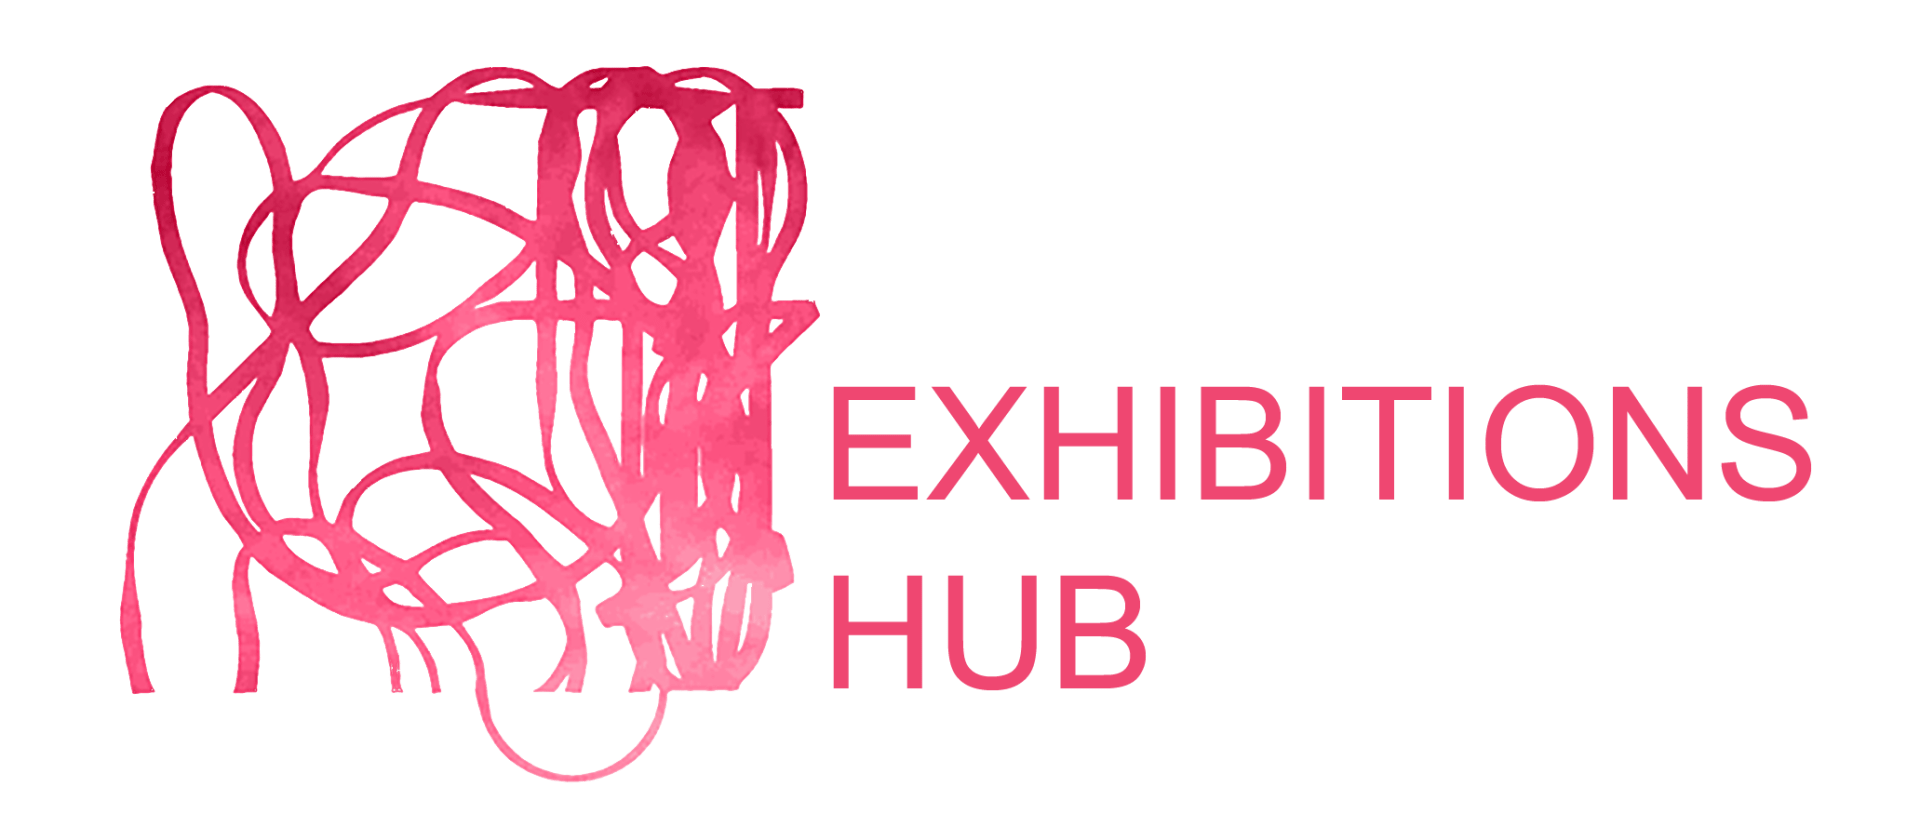 Exhibitions Hub